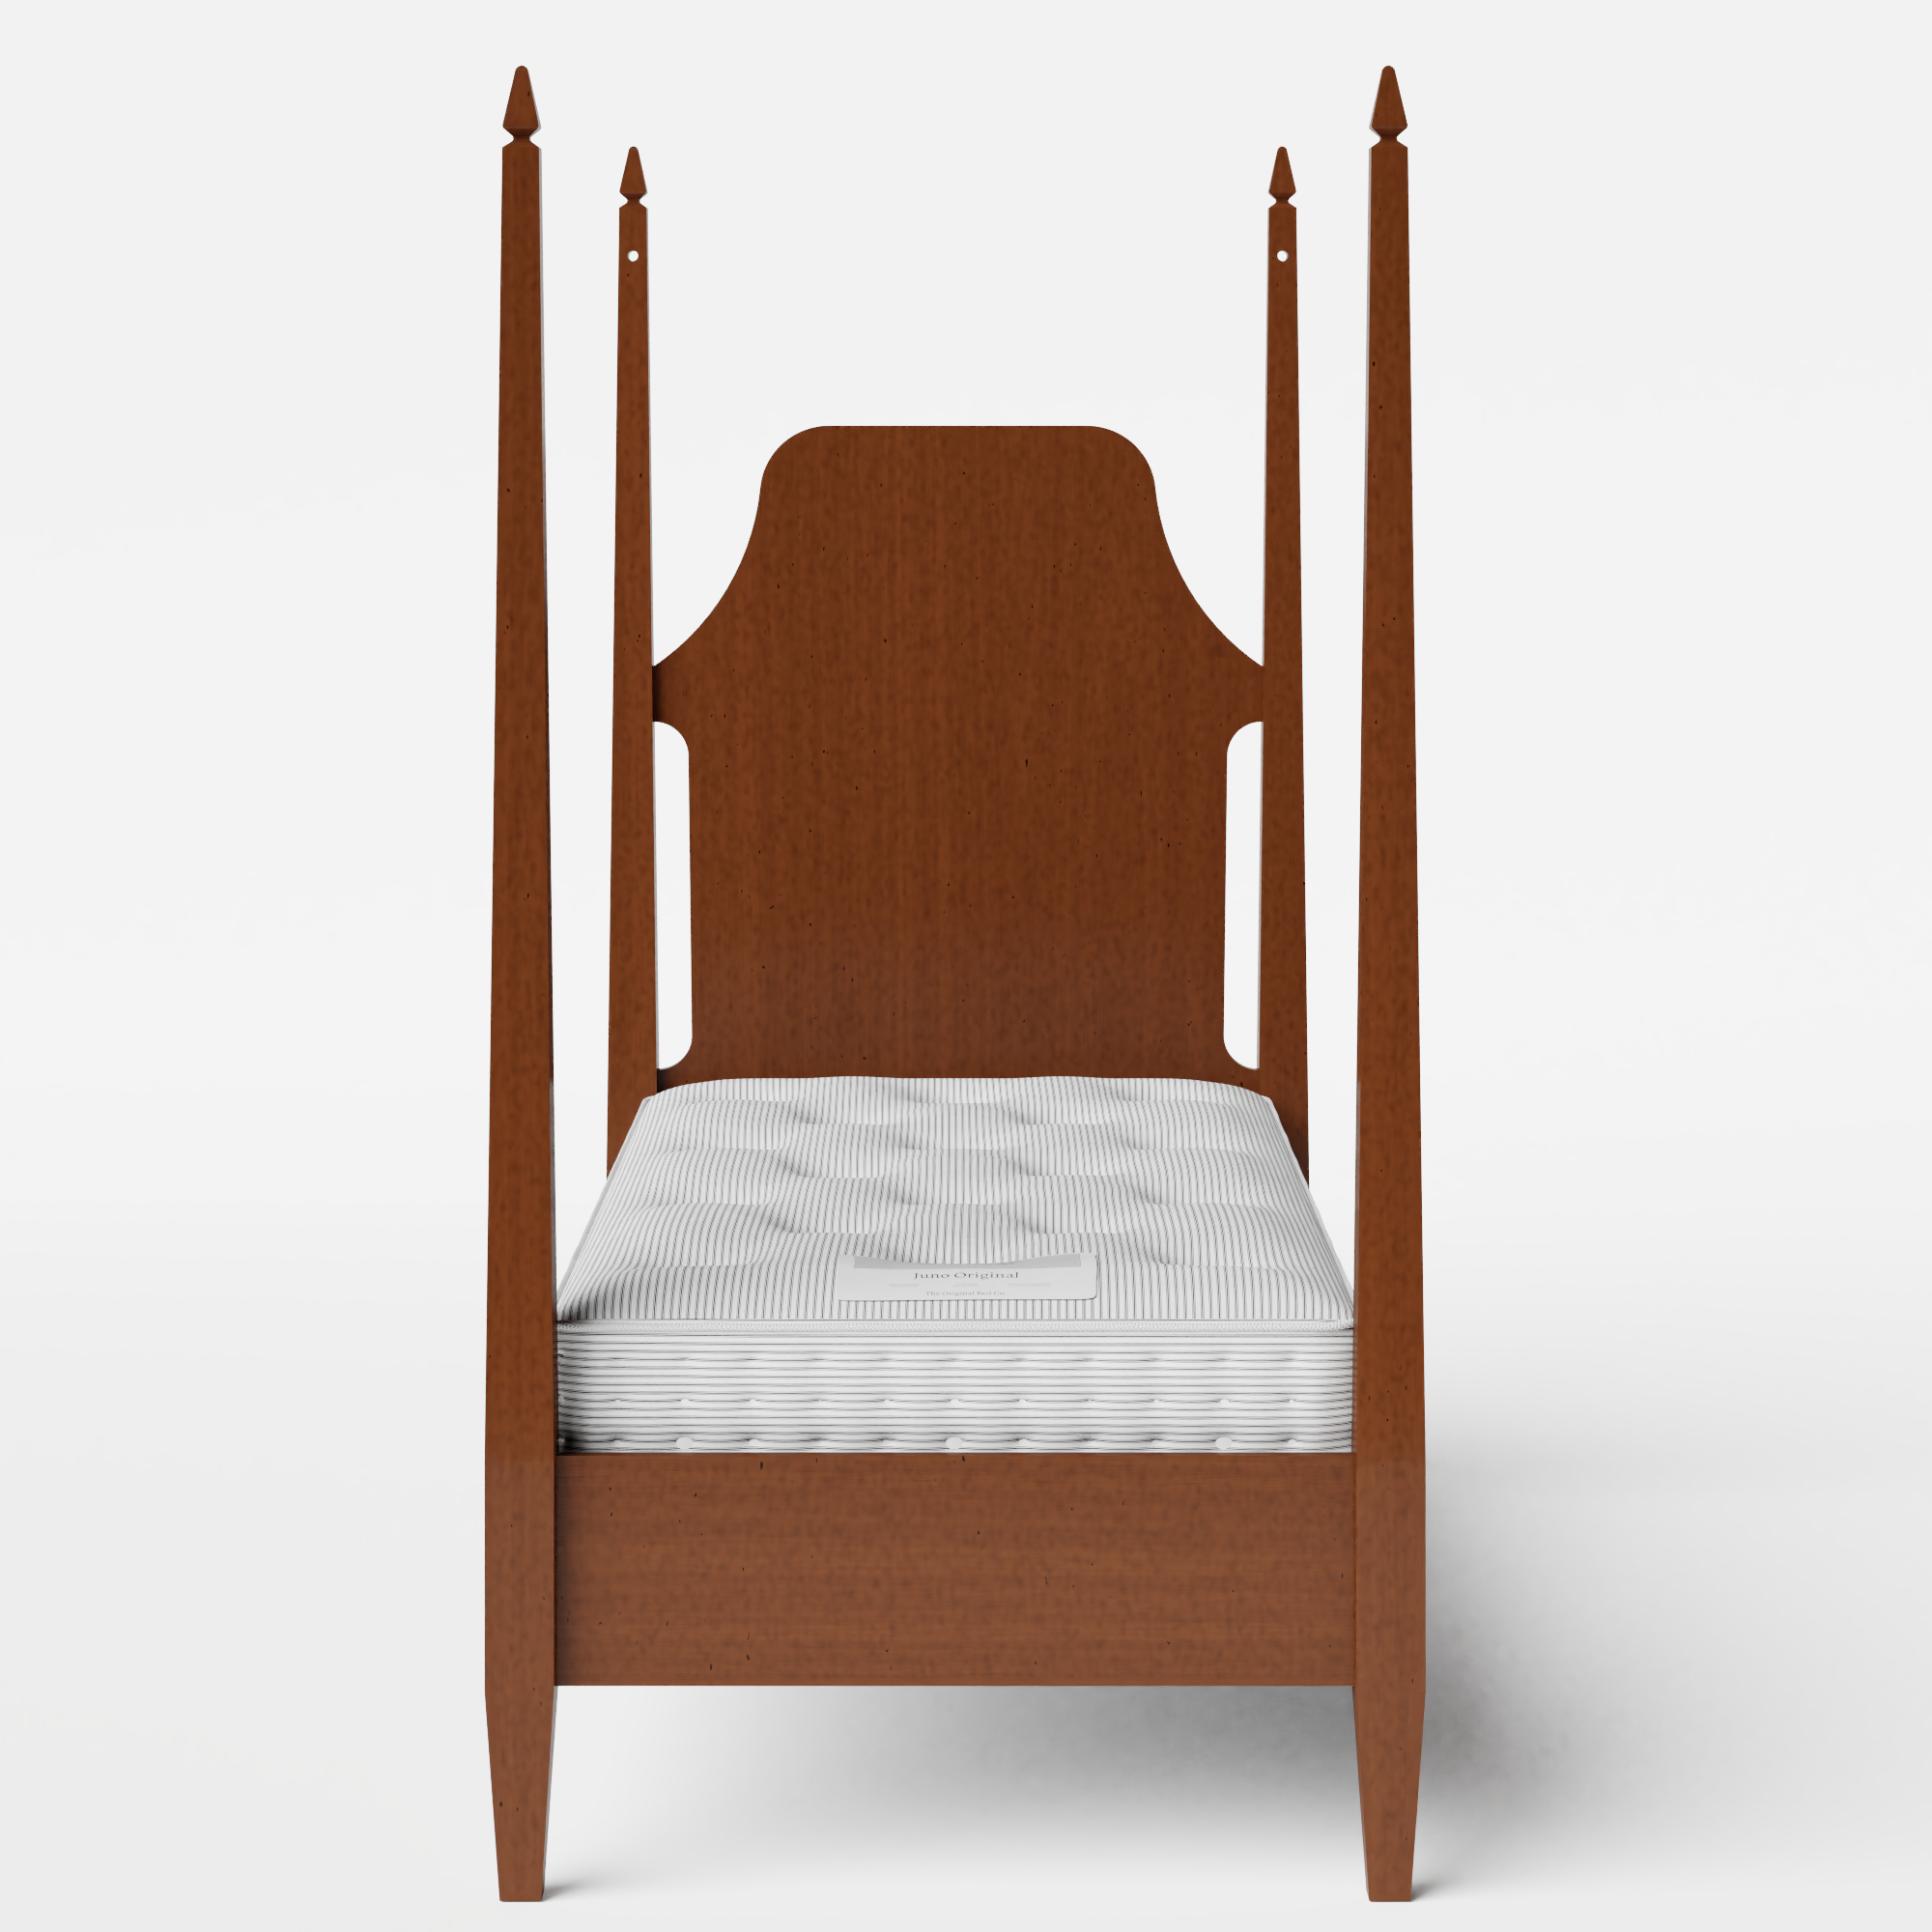 Turner cama individual de madera pintada en dark cherry con colchón